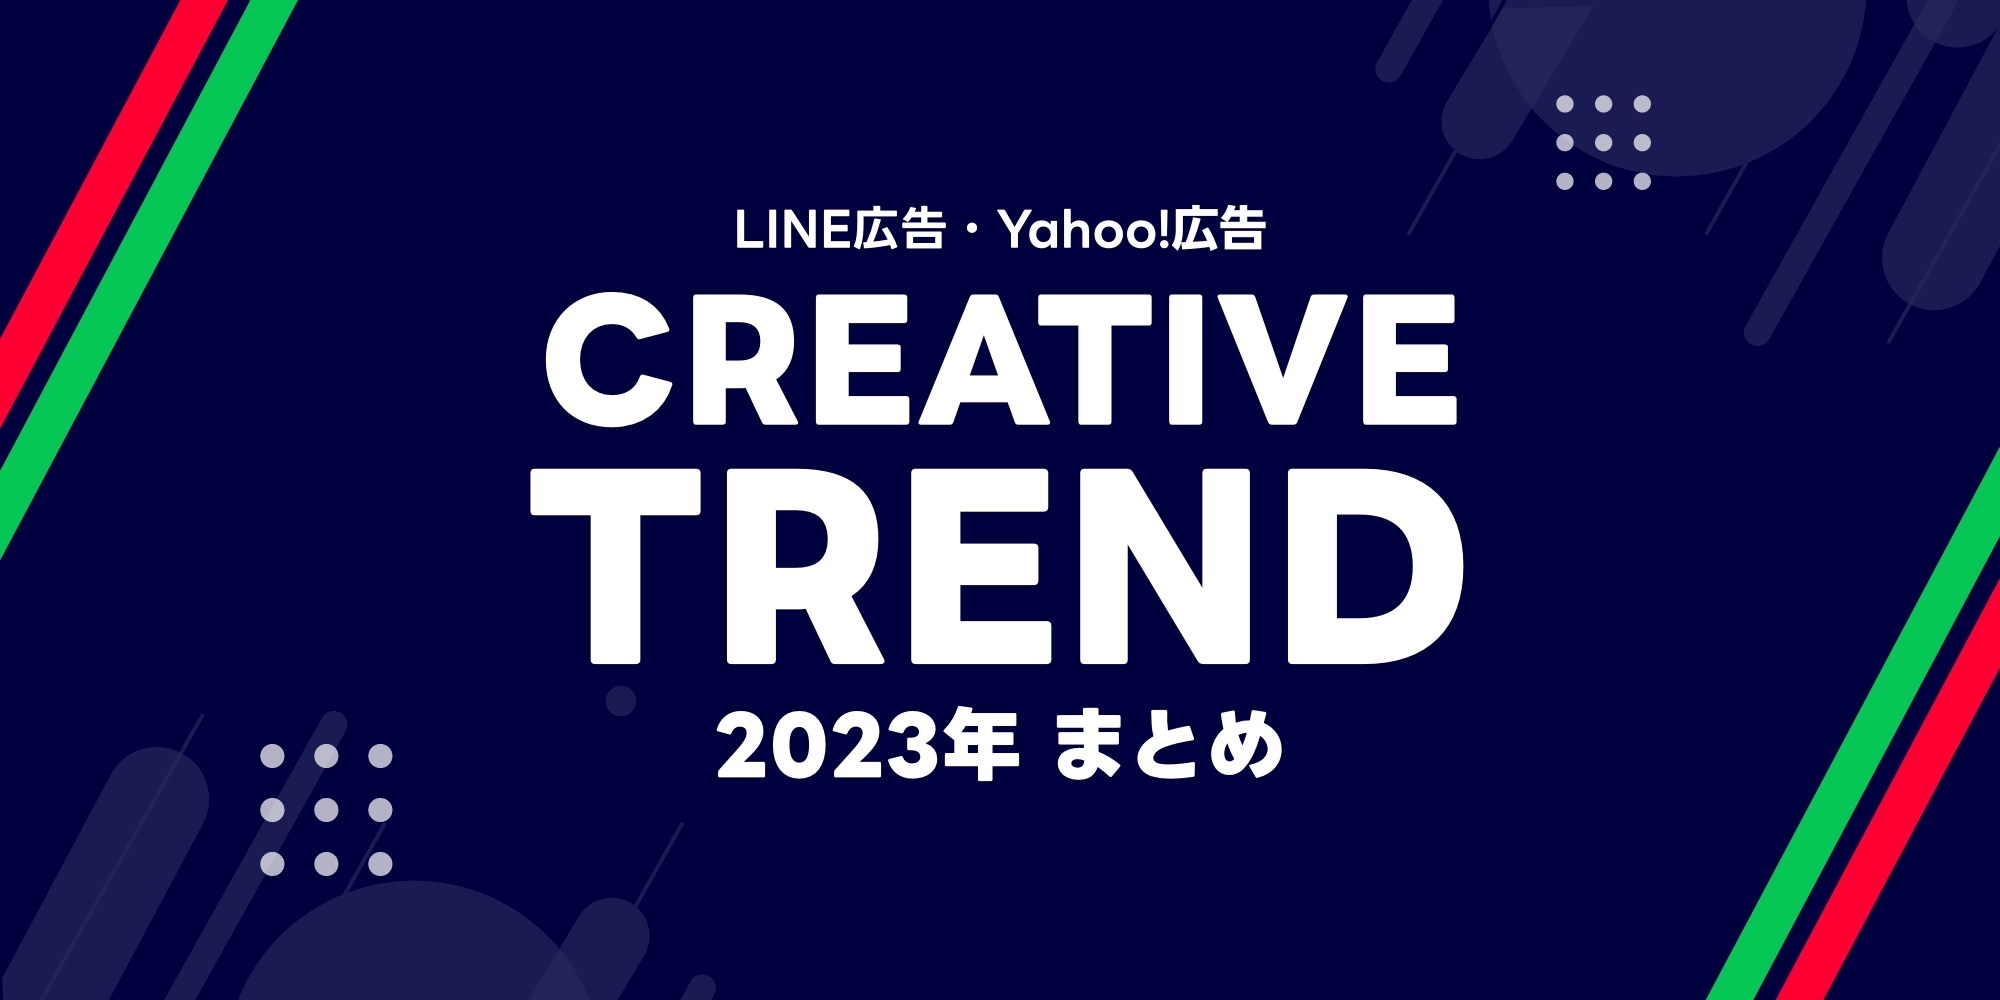 【LINE広告&Yahoo!広告】CREATIVE TREND 2023年 まとめ